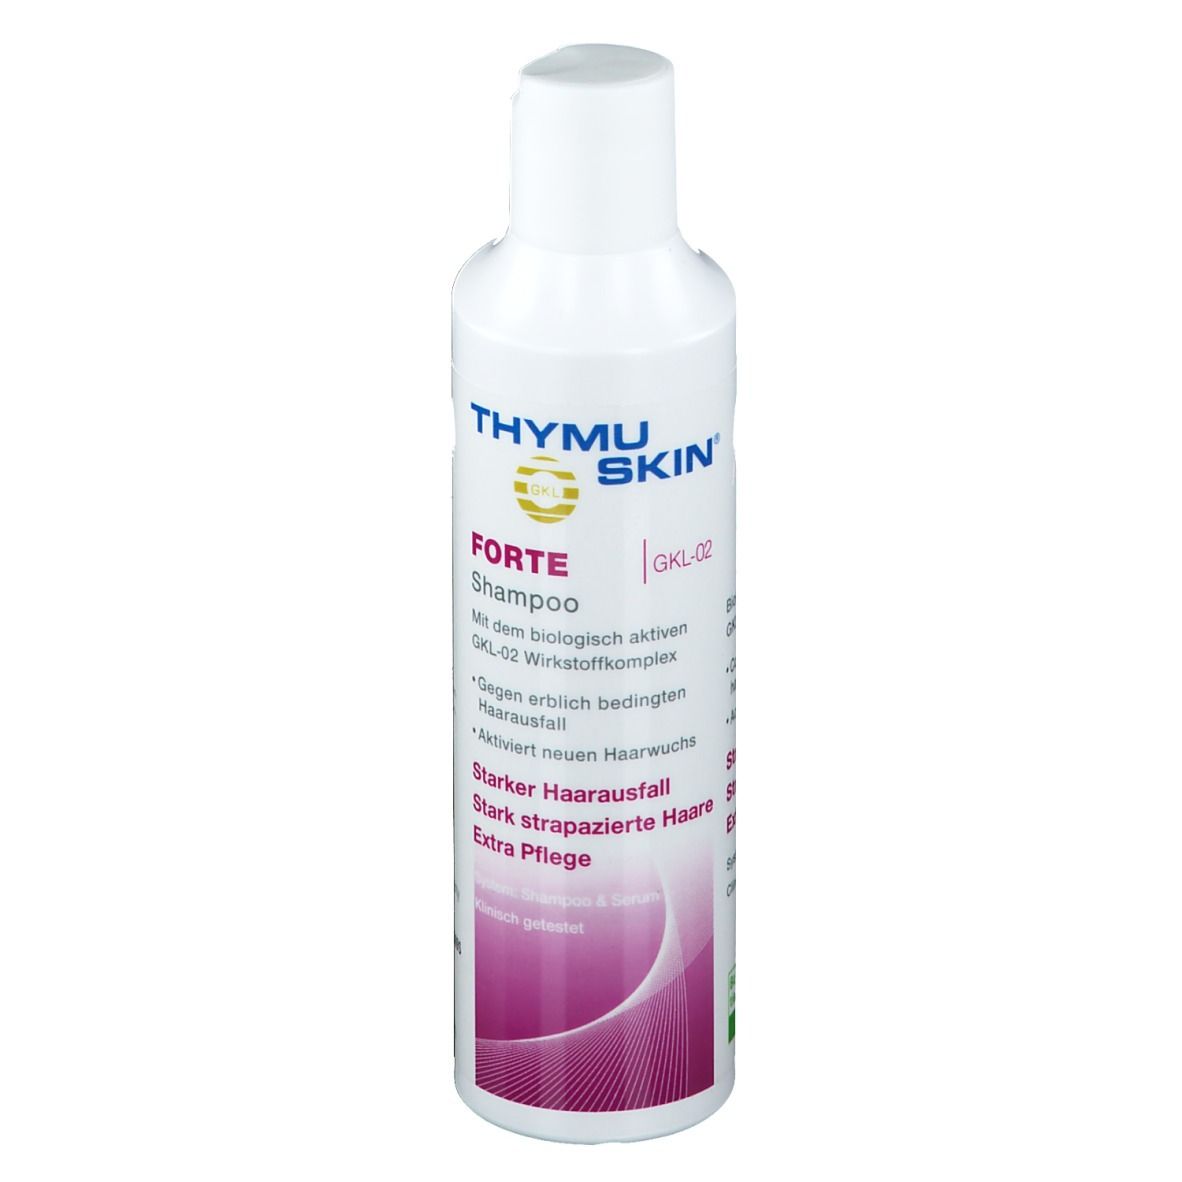 Thymuskin® FORTE Shampoo